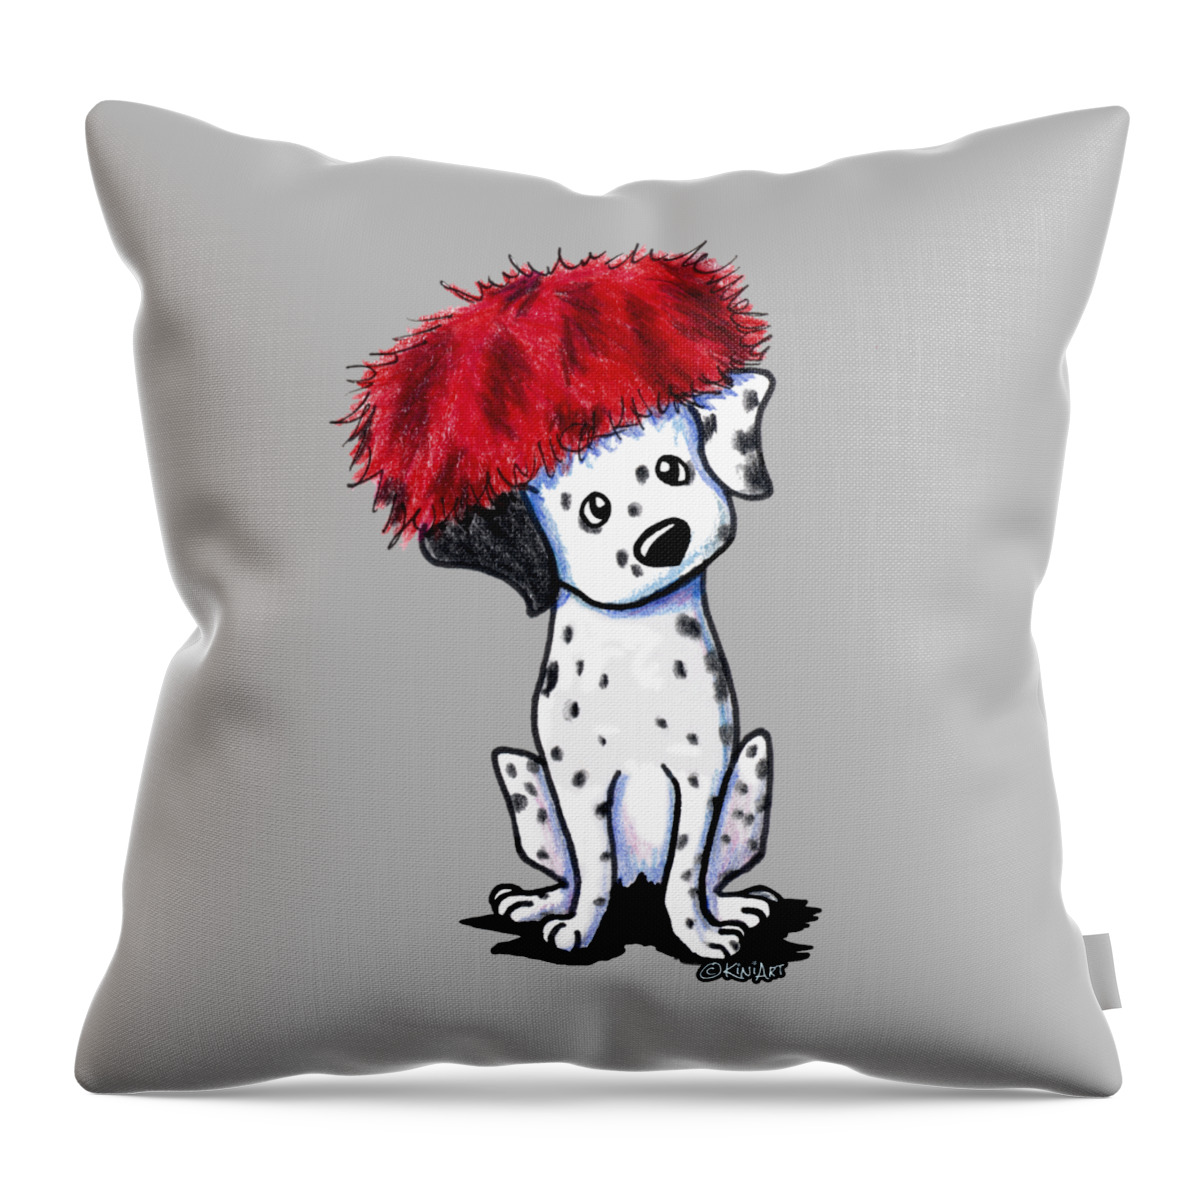 Dalmatian Throw Pillow featuring the drawing Dalmatian In Red by Kim Niles aka KiniArt